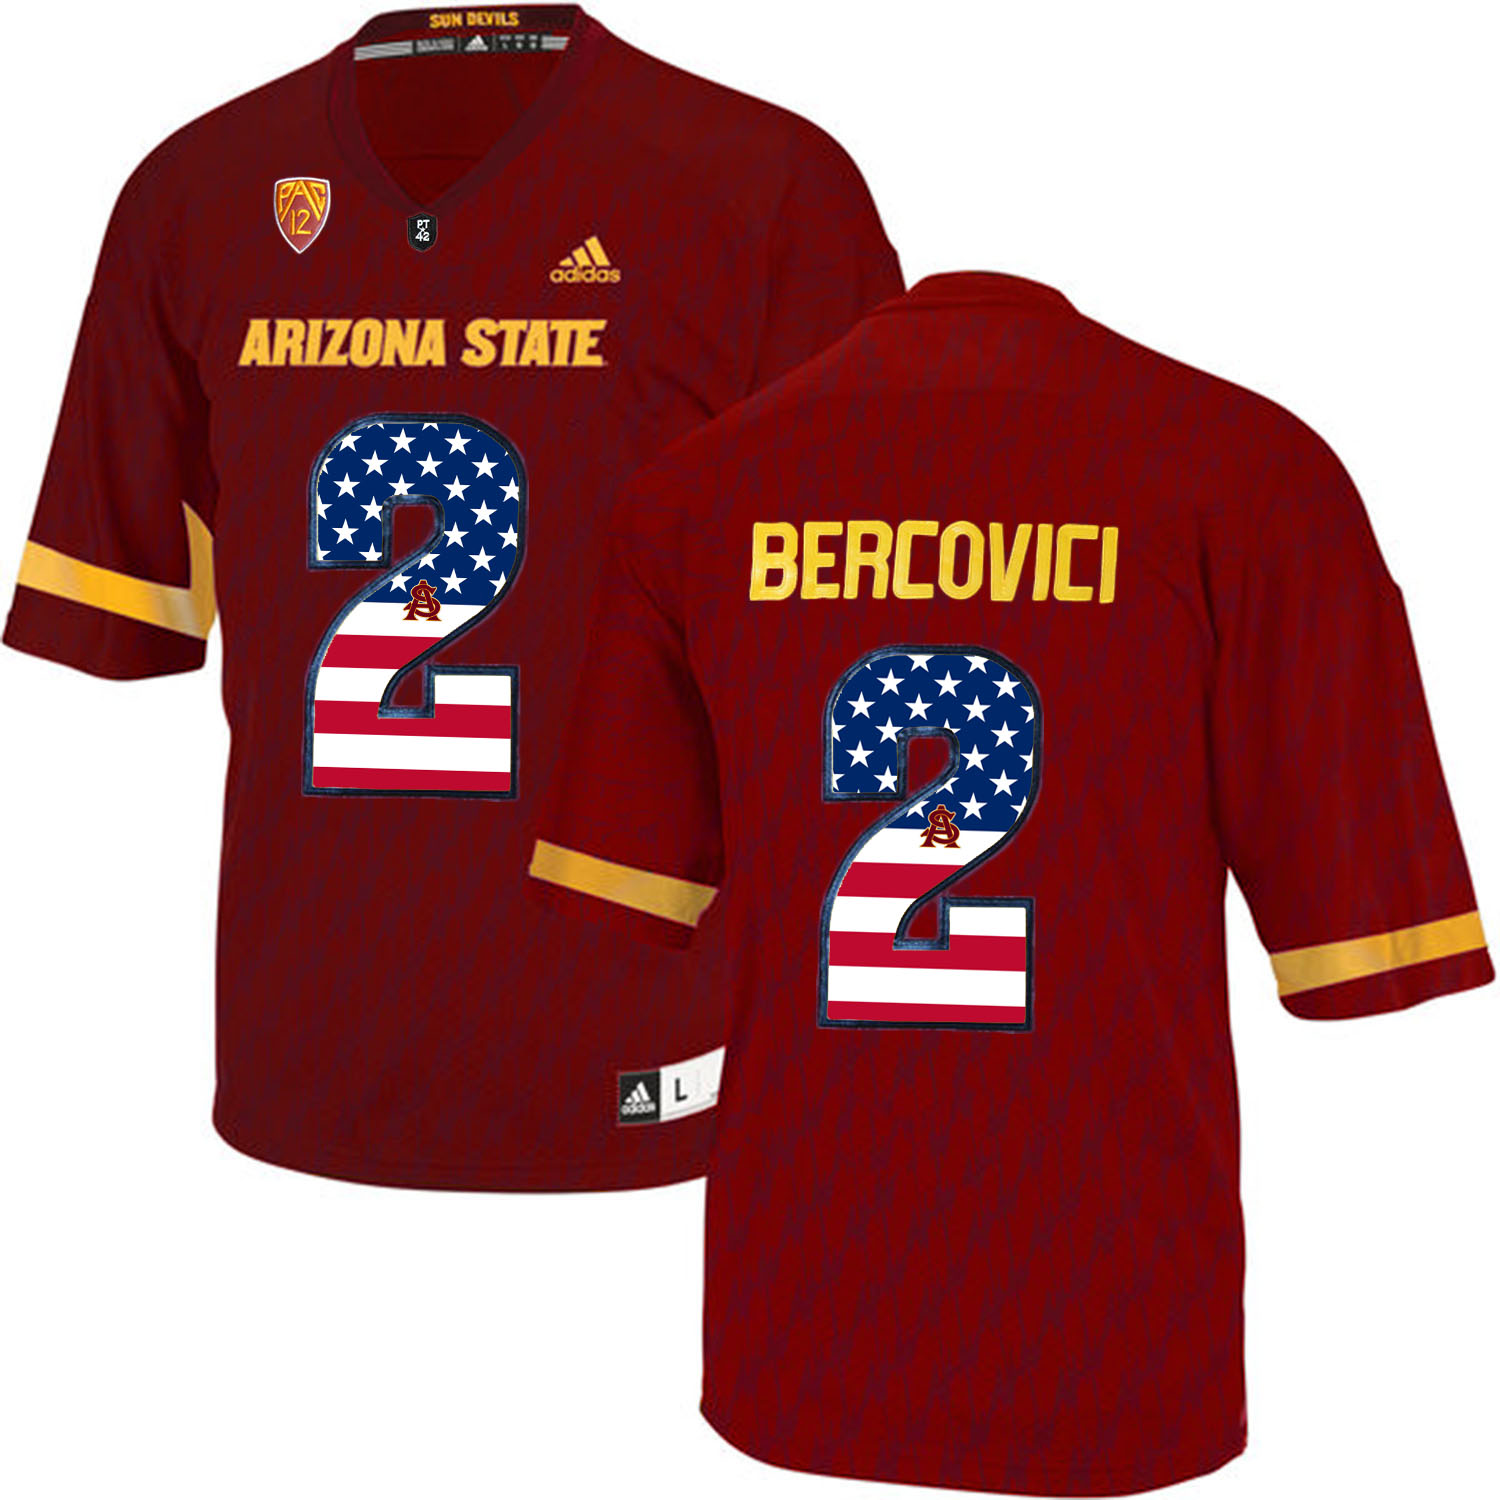 Arizona State Sun Devils 2 Mike Bercovici Red USA Flag College Football Jersey